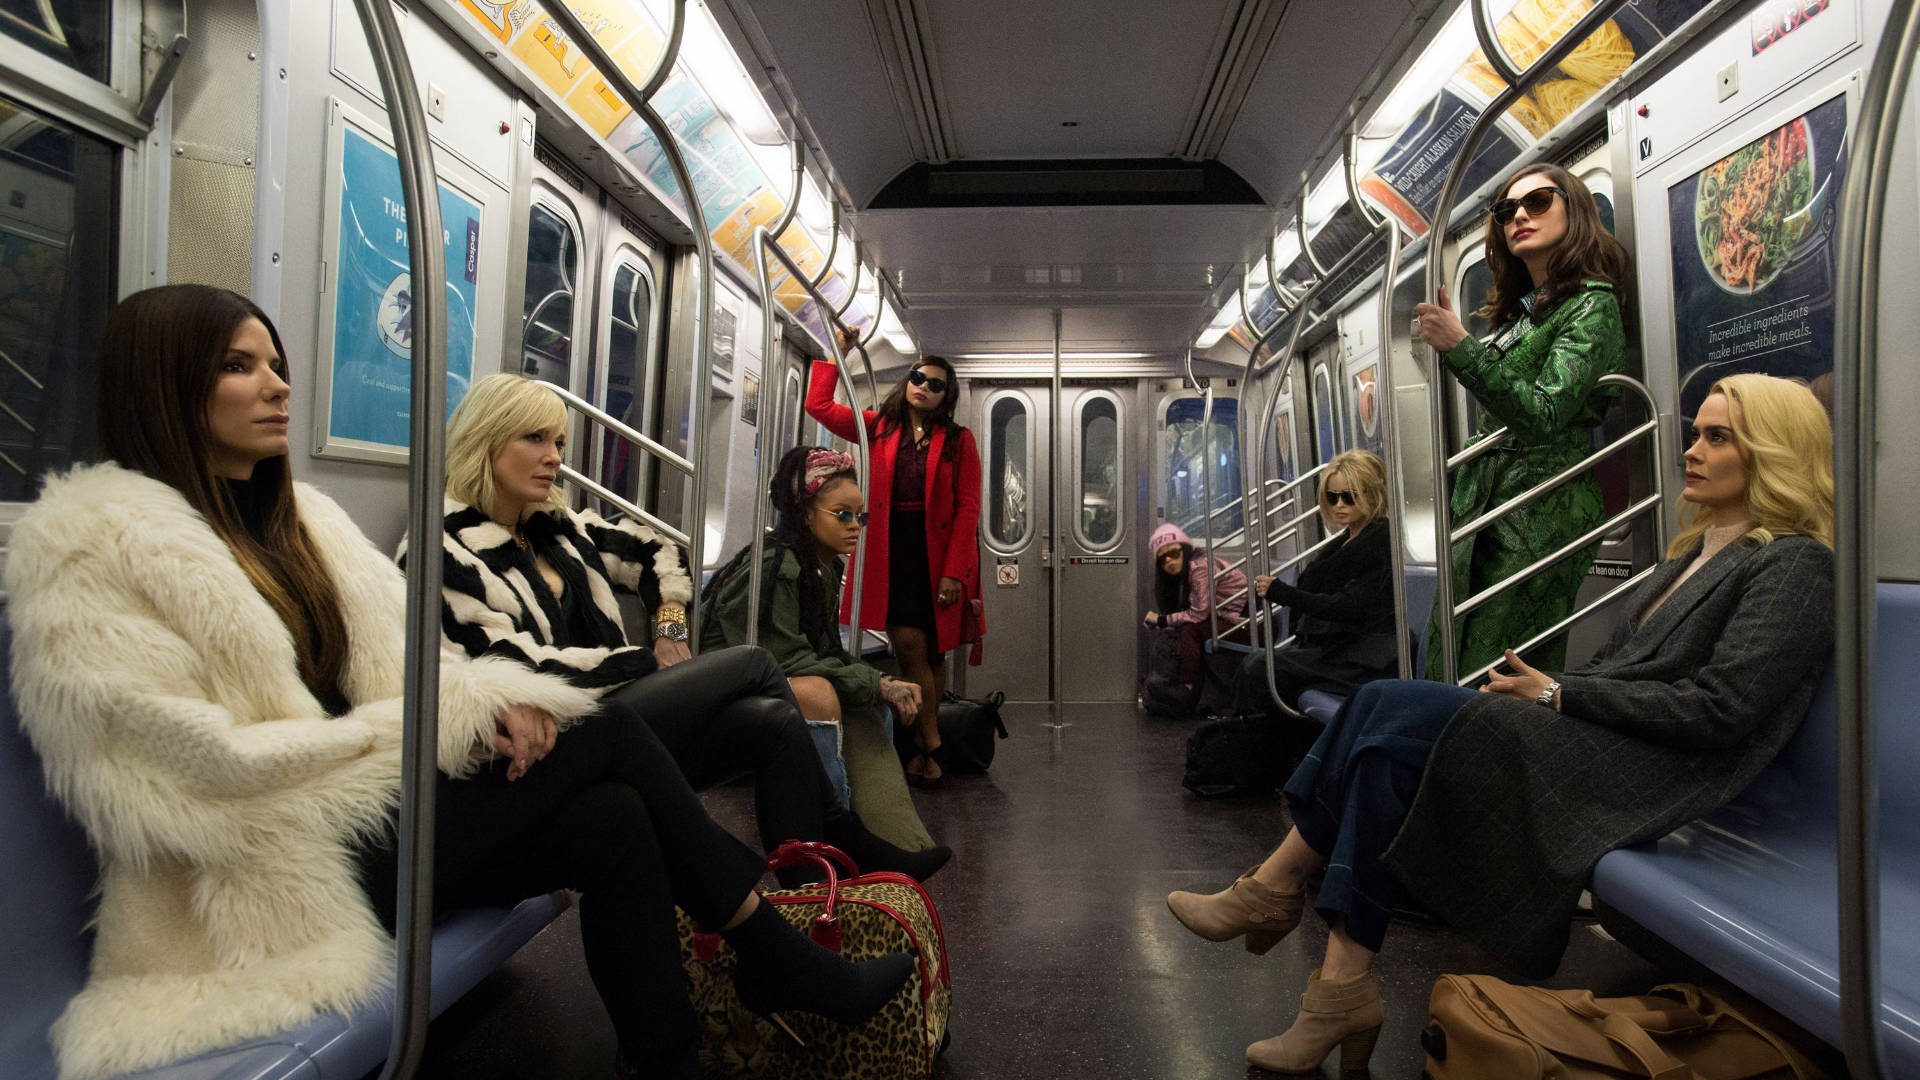 Cate Blanchett Ocean's 8 Subway Scene Background